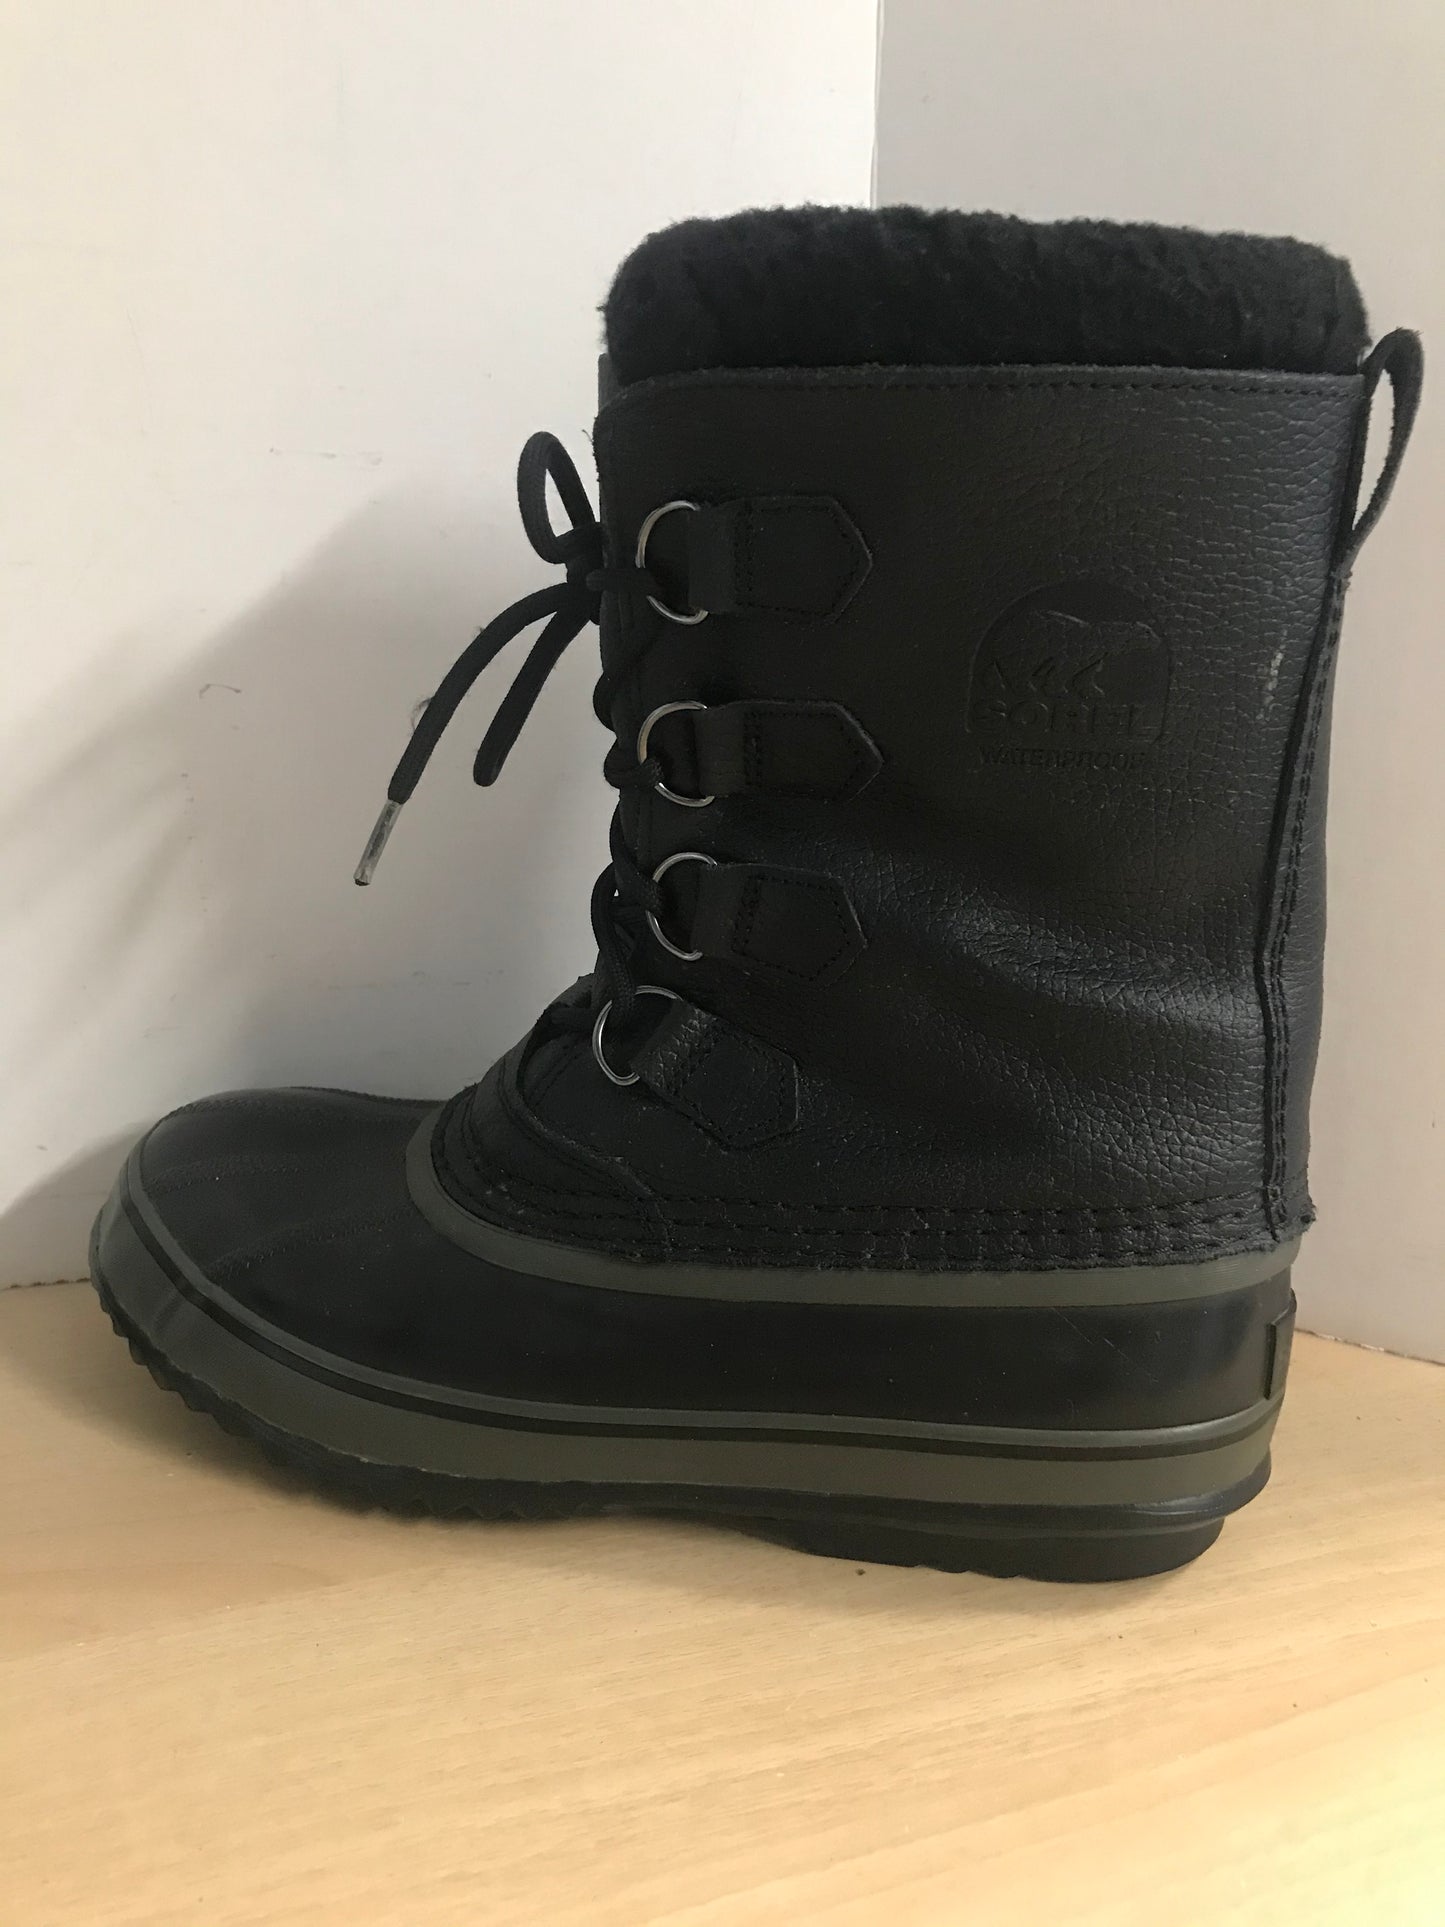 Winter Boots Men's Size 9 Sorel Waterproof With Liner Black Leather Excellent